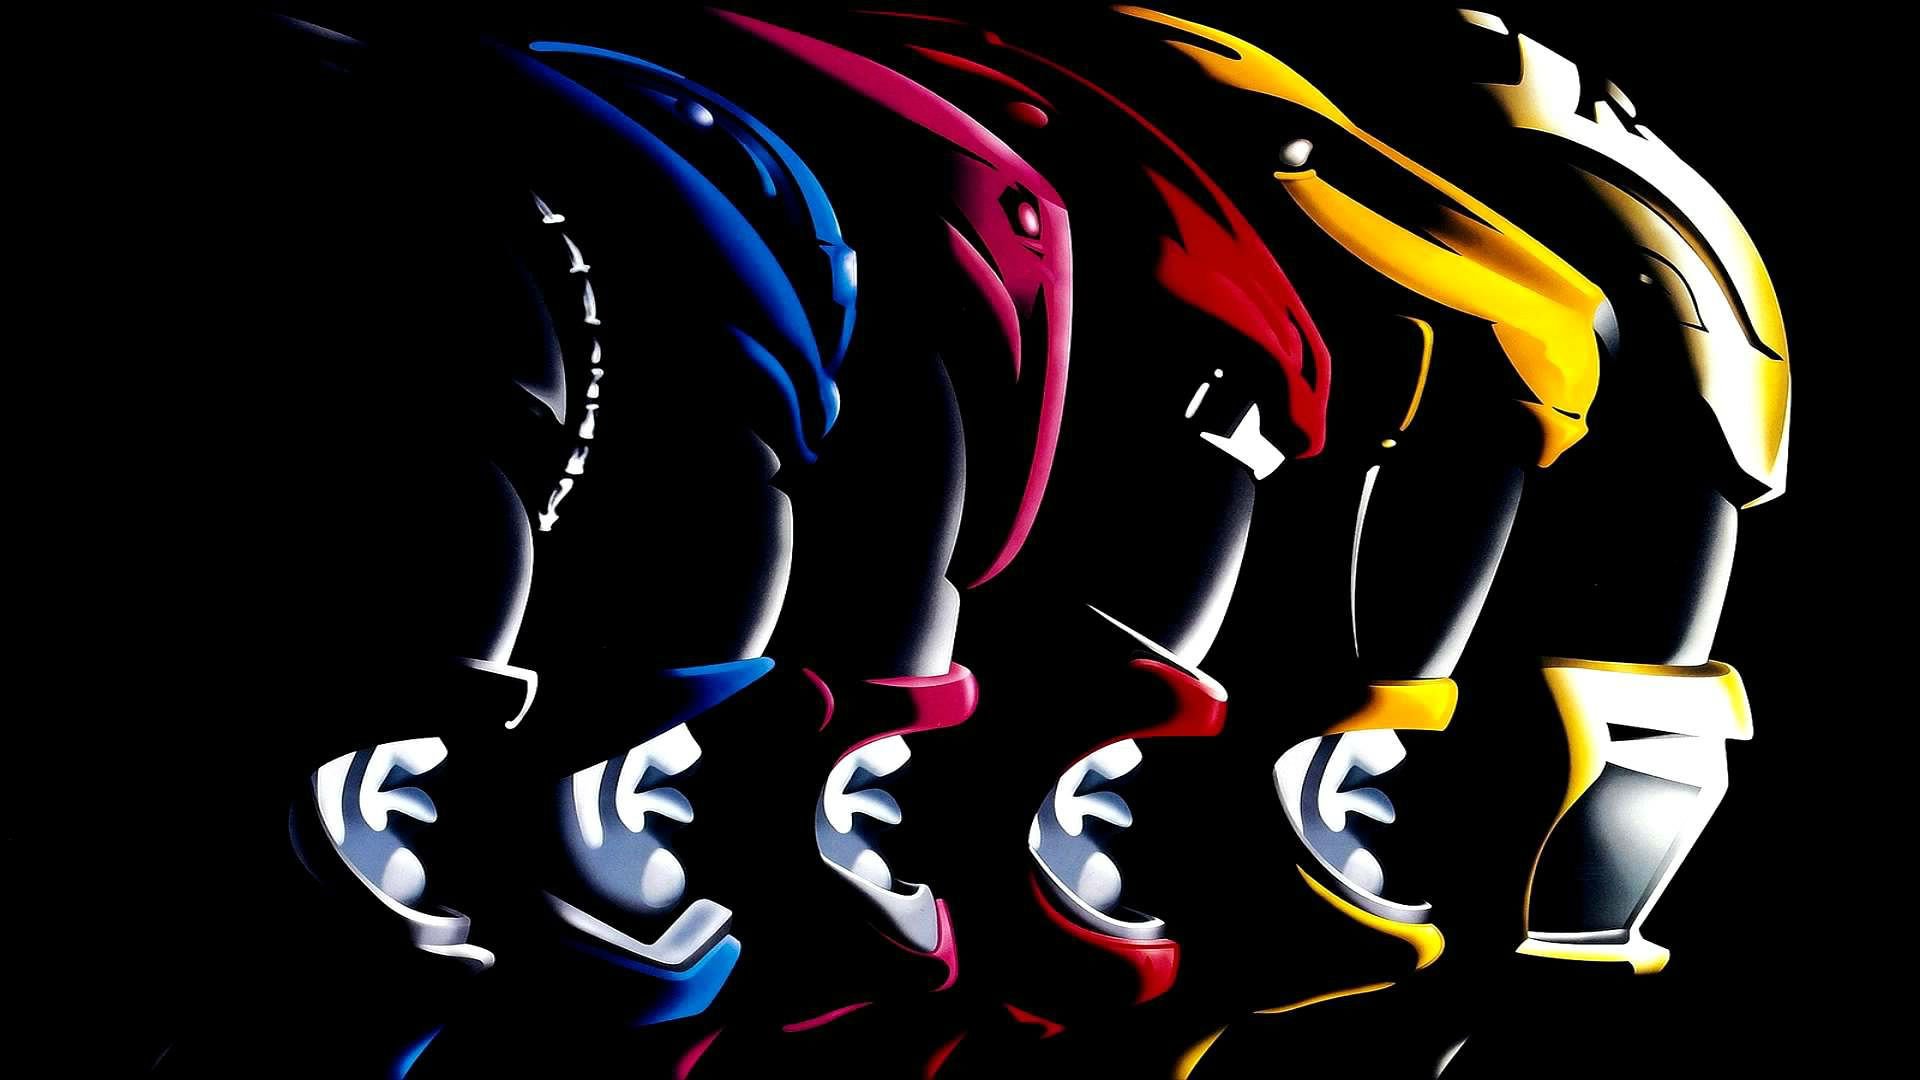 Power Rangers Wallpaper For Mac